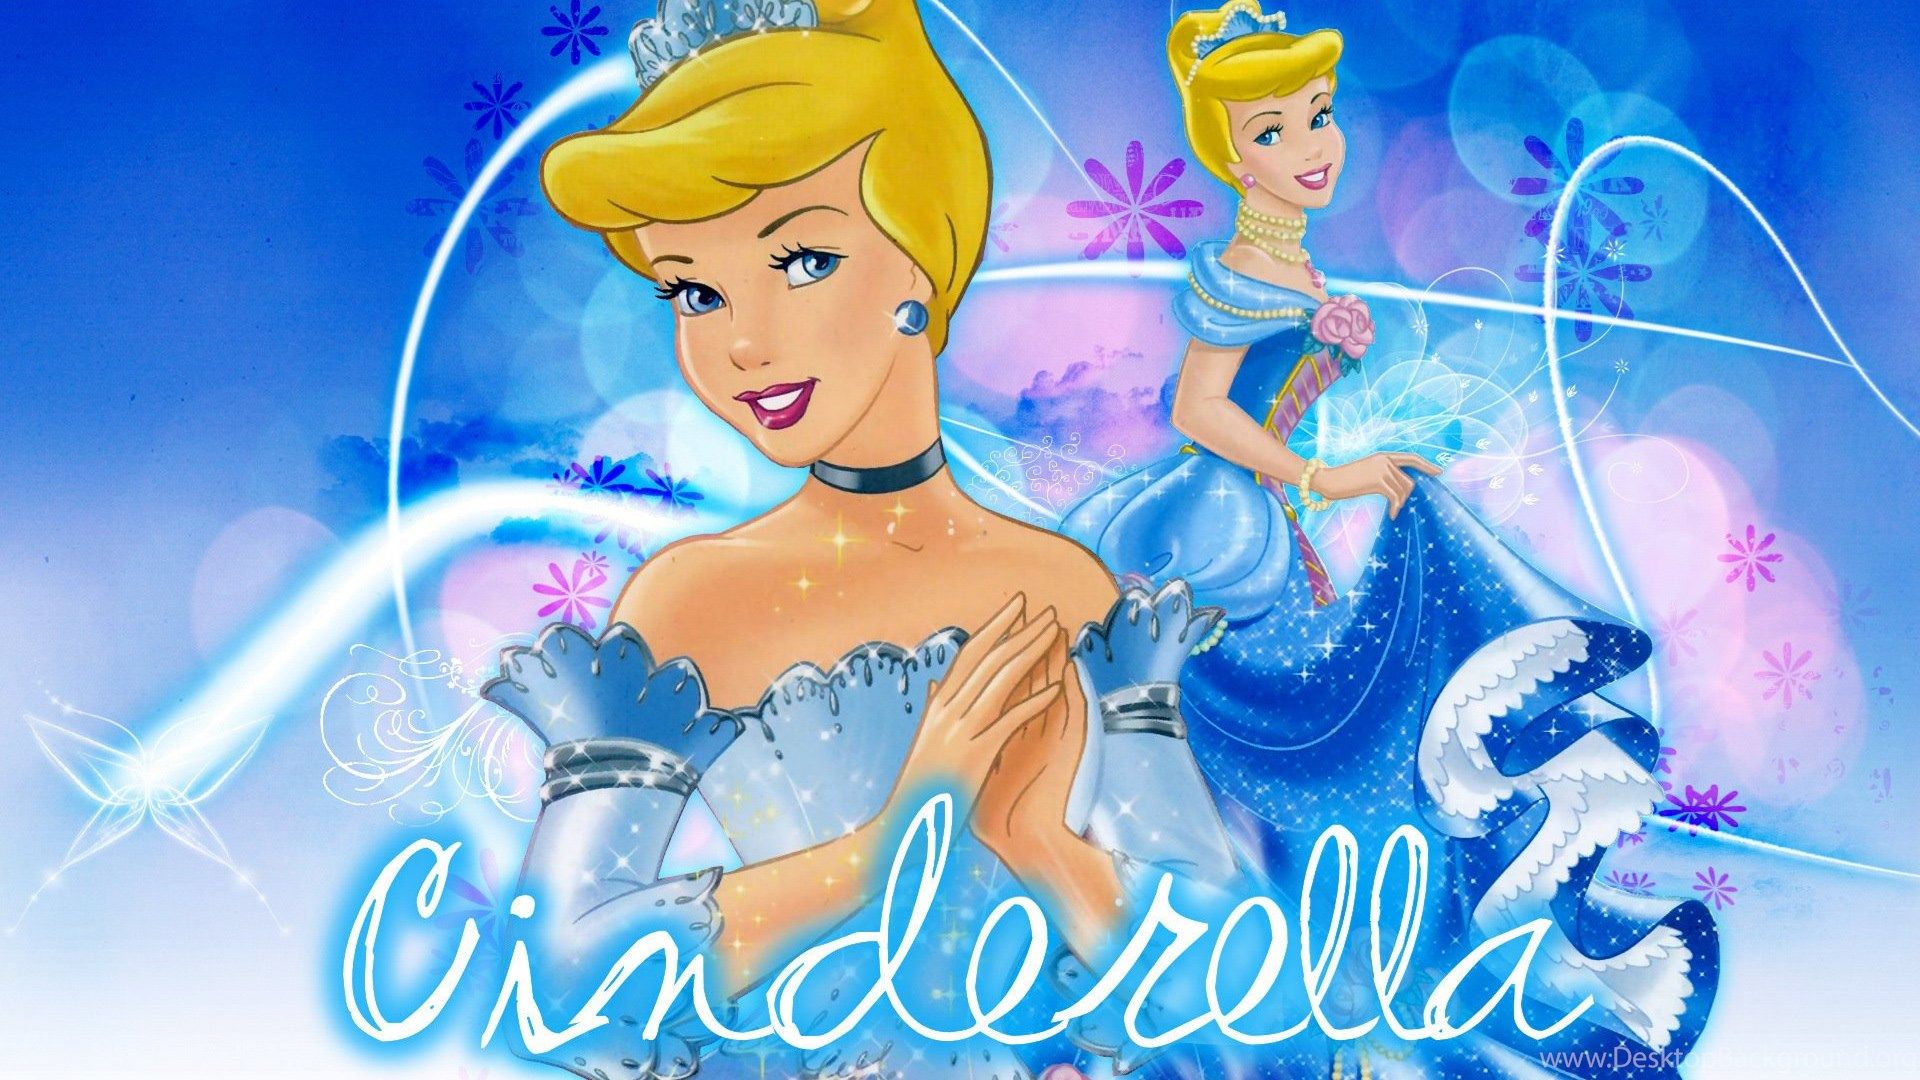 Cinderella (2021) Wallpapers